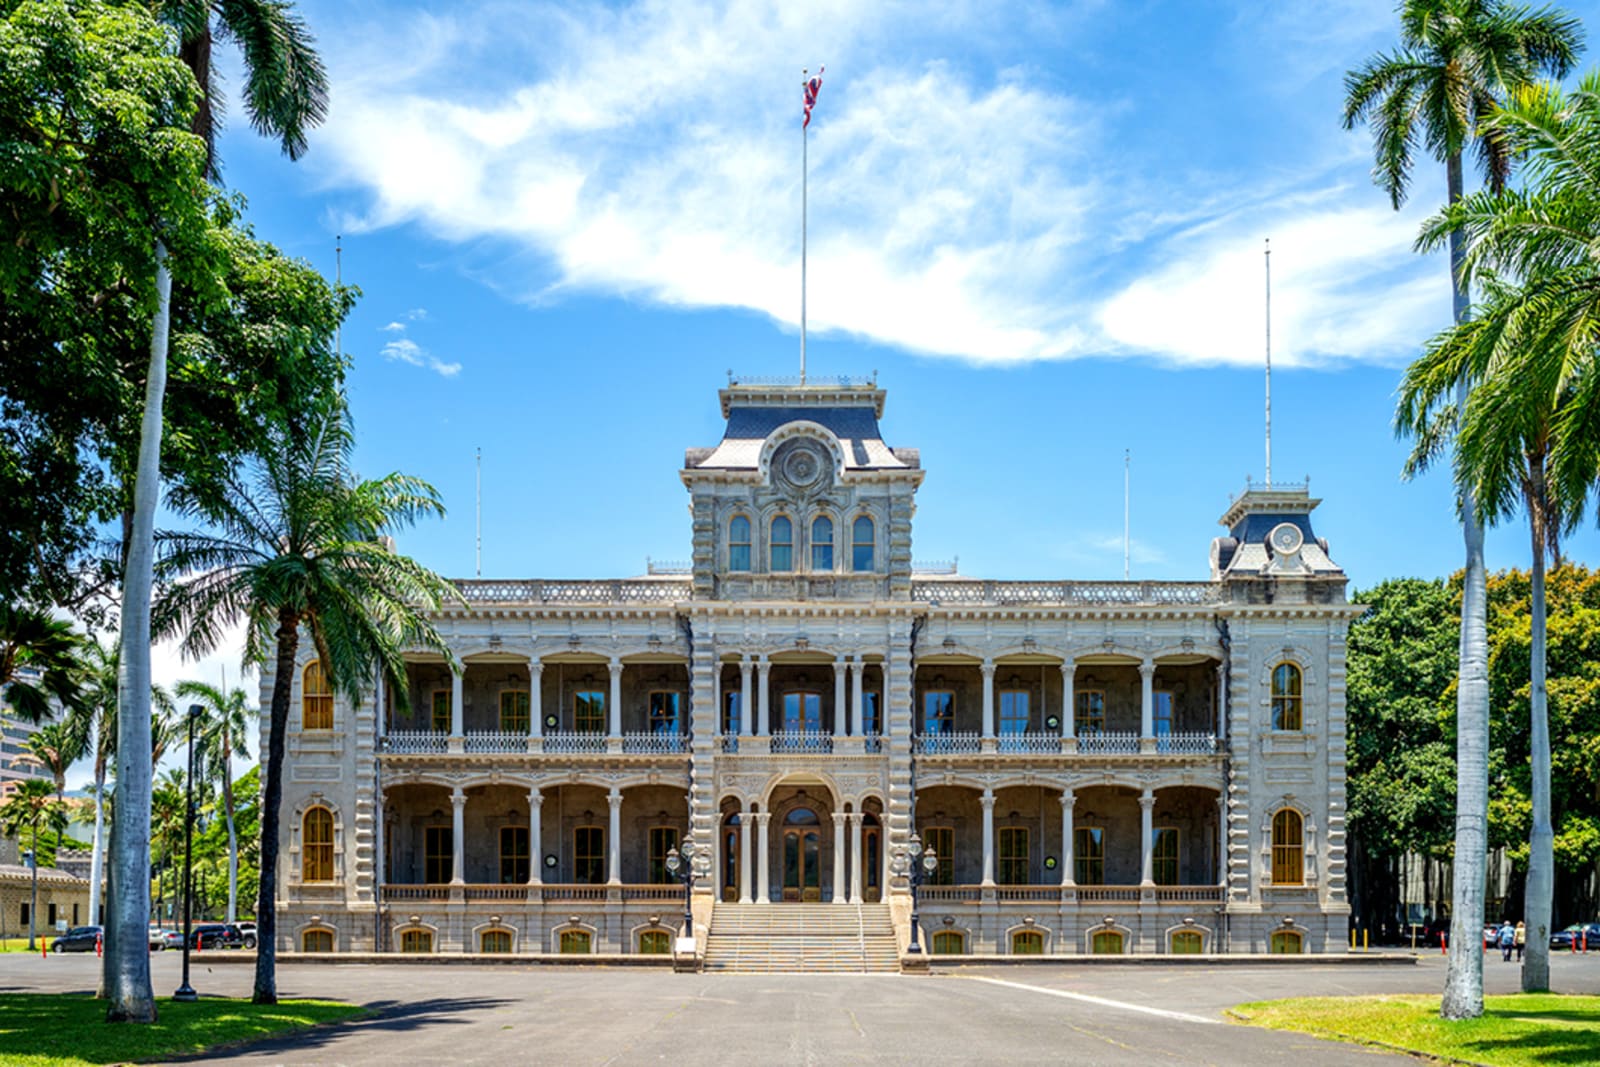 ʻIolani Palace in Downtown Honolulu